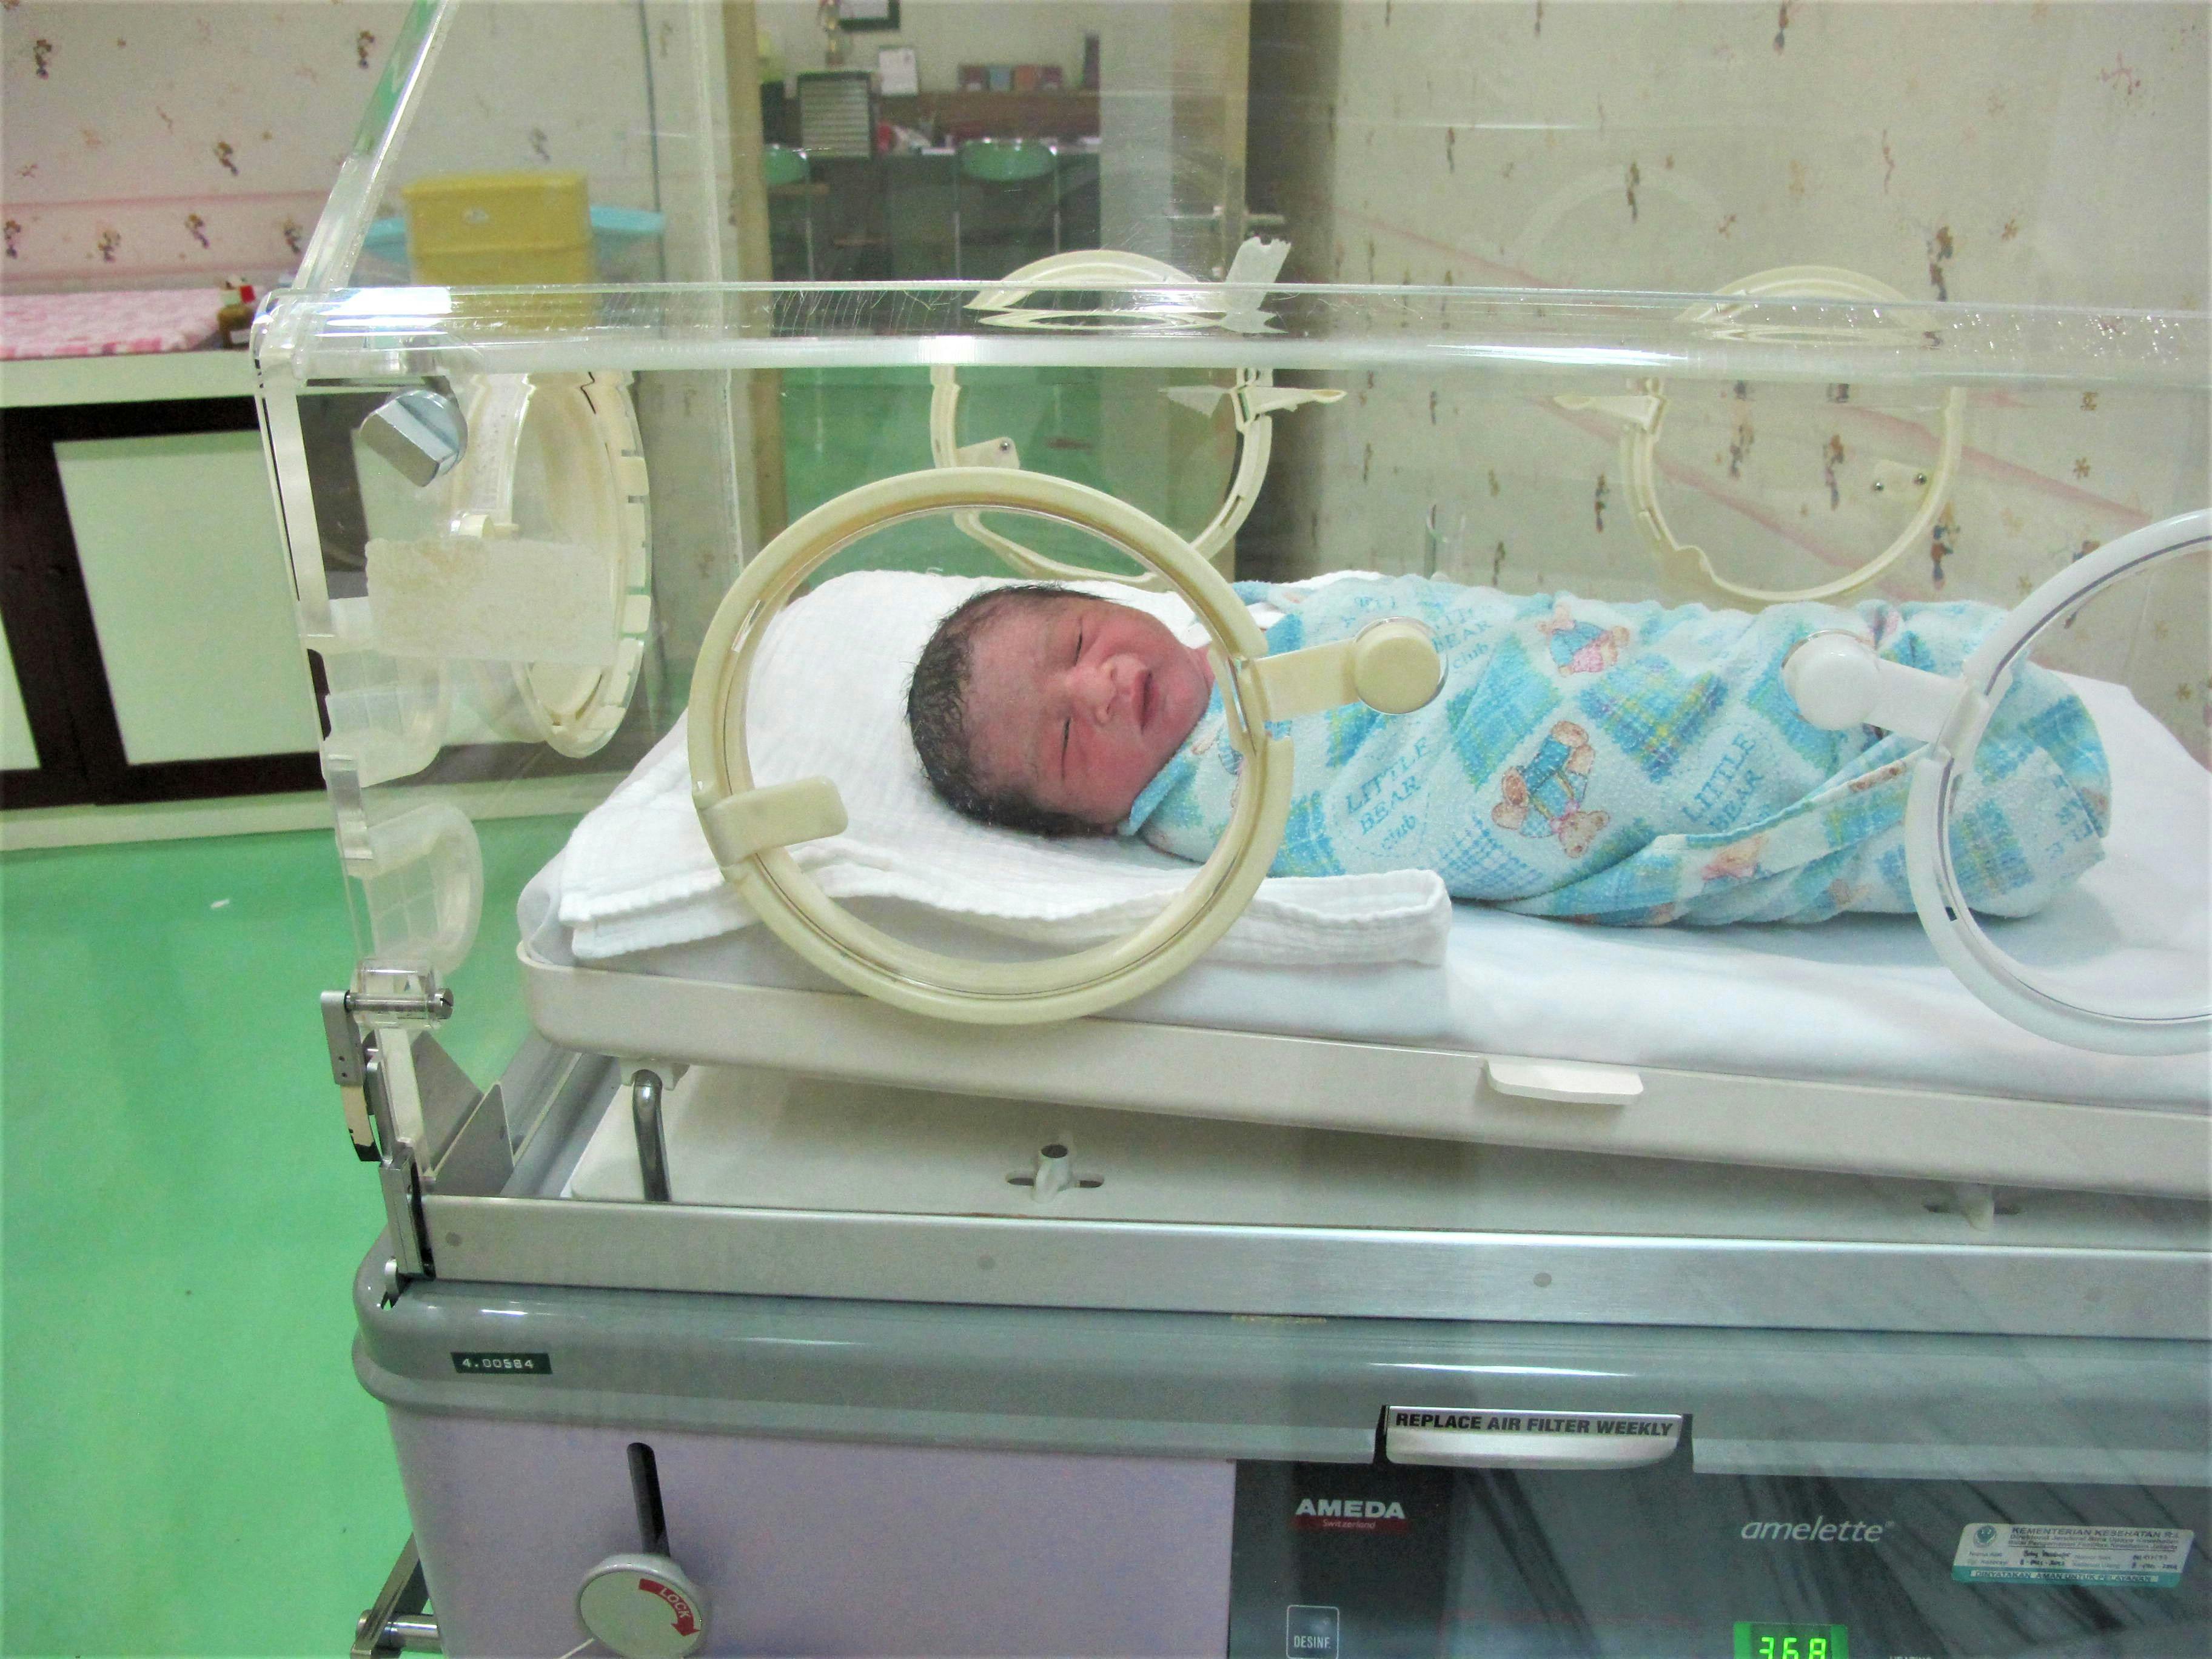 A newborn baby in an incubator | Source: Pexels